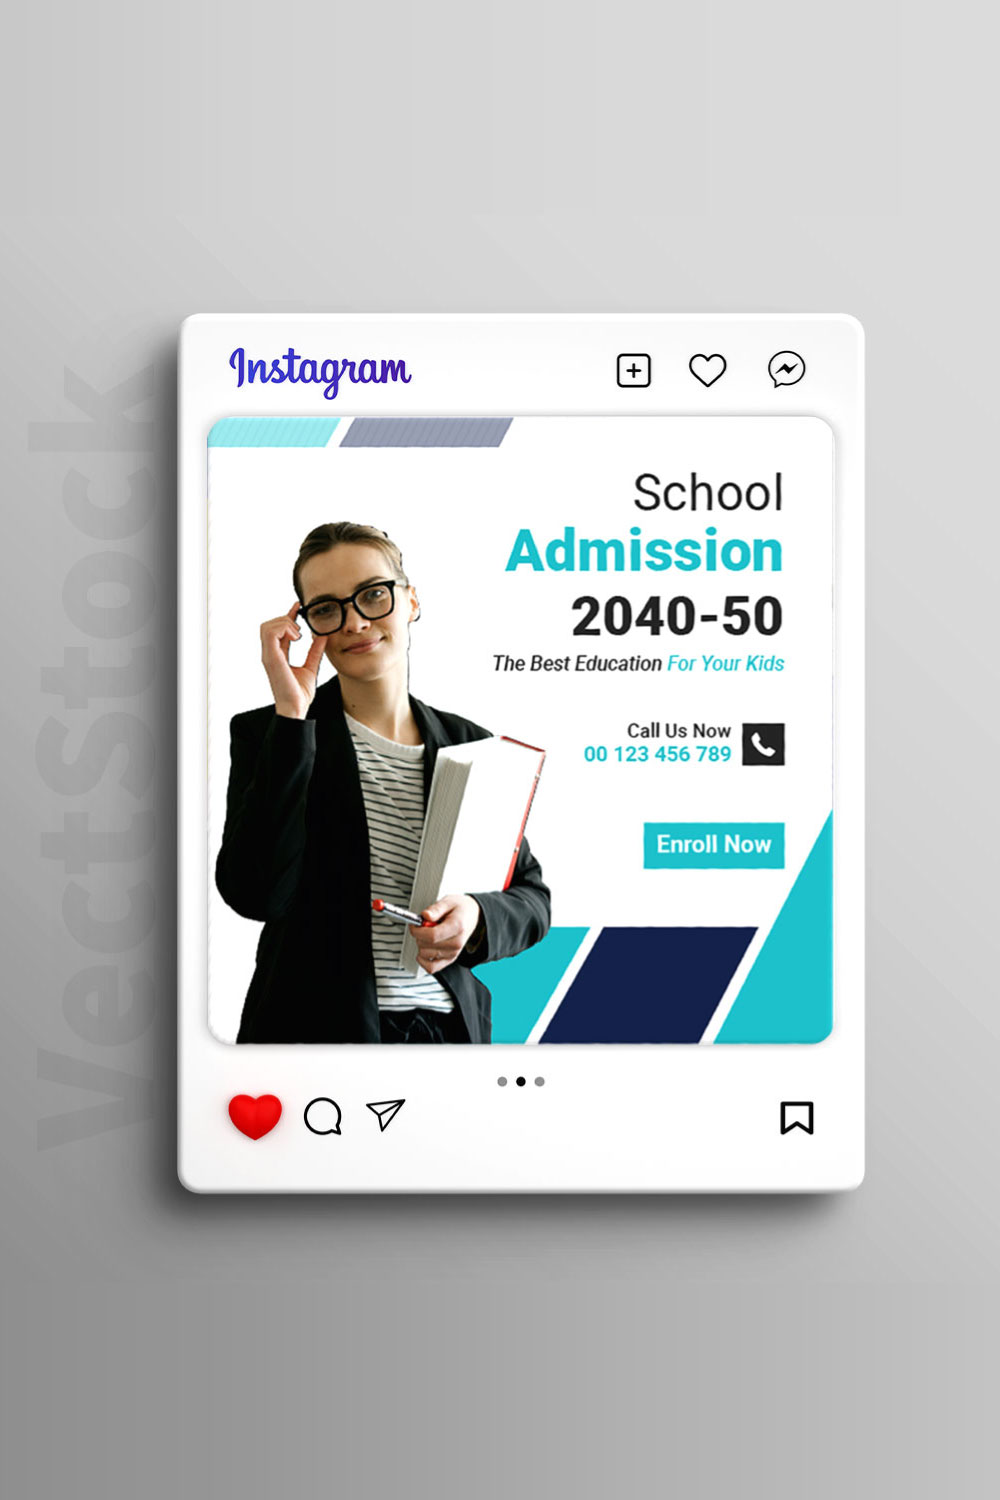 School admission sale social media Instagram post pinterest preview image.